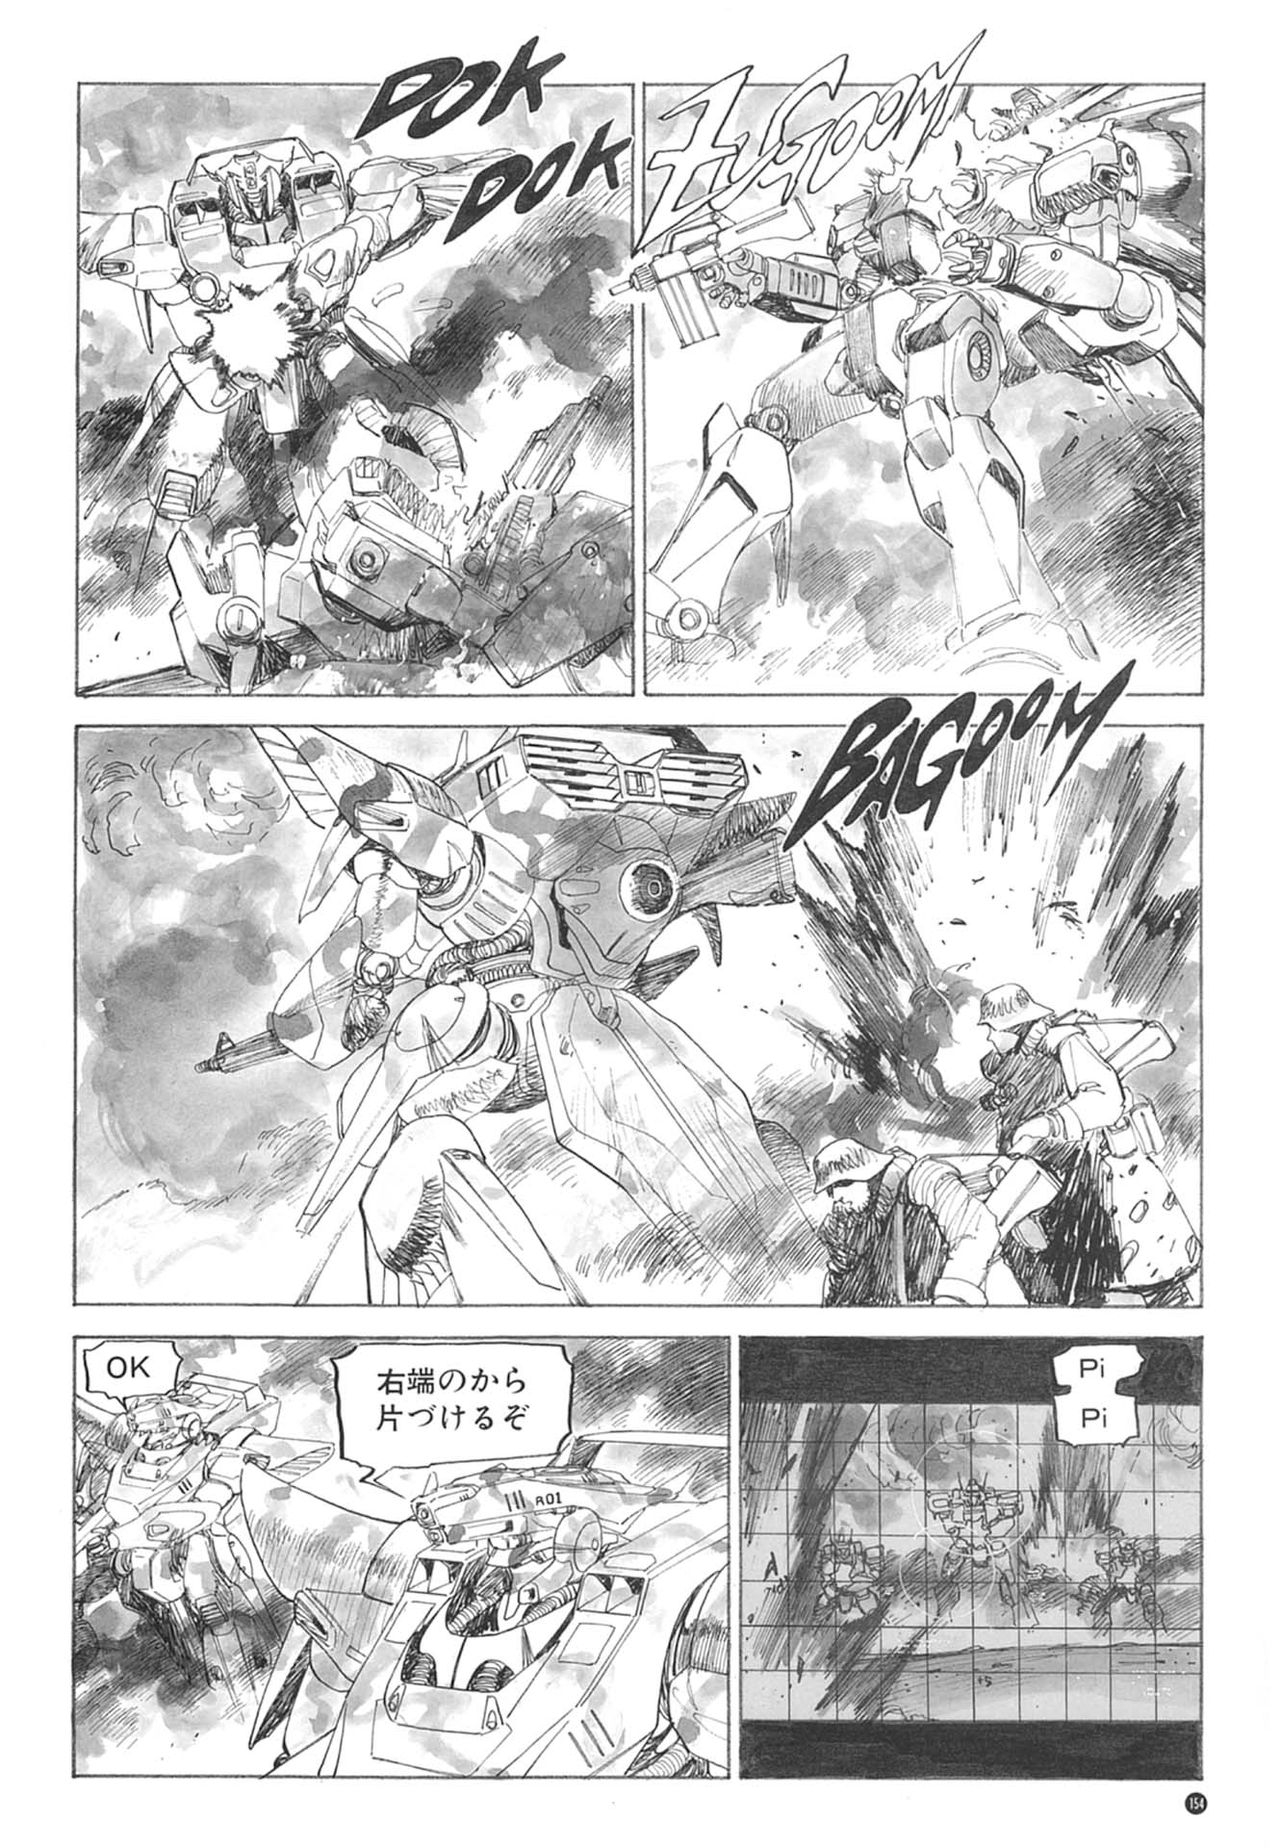 [Kazuhisa Kondo] Kazuhisa Kondo 2D & 3D Works - Go Ahead - From Mobile Suit Gundam to Original Mechanism 153